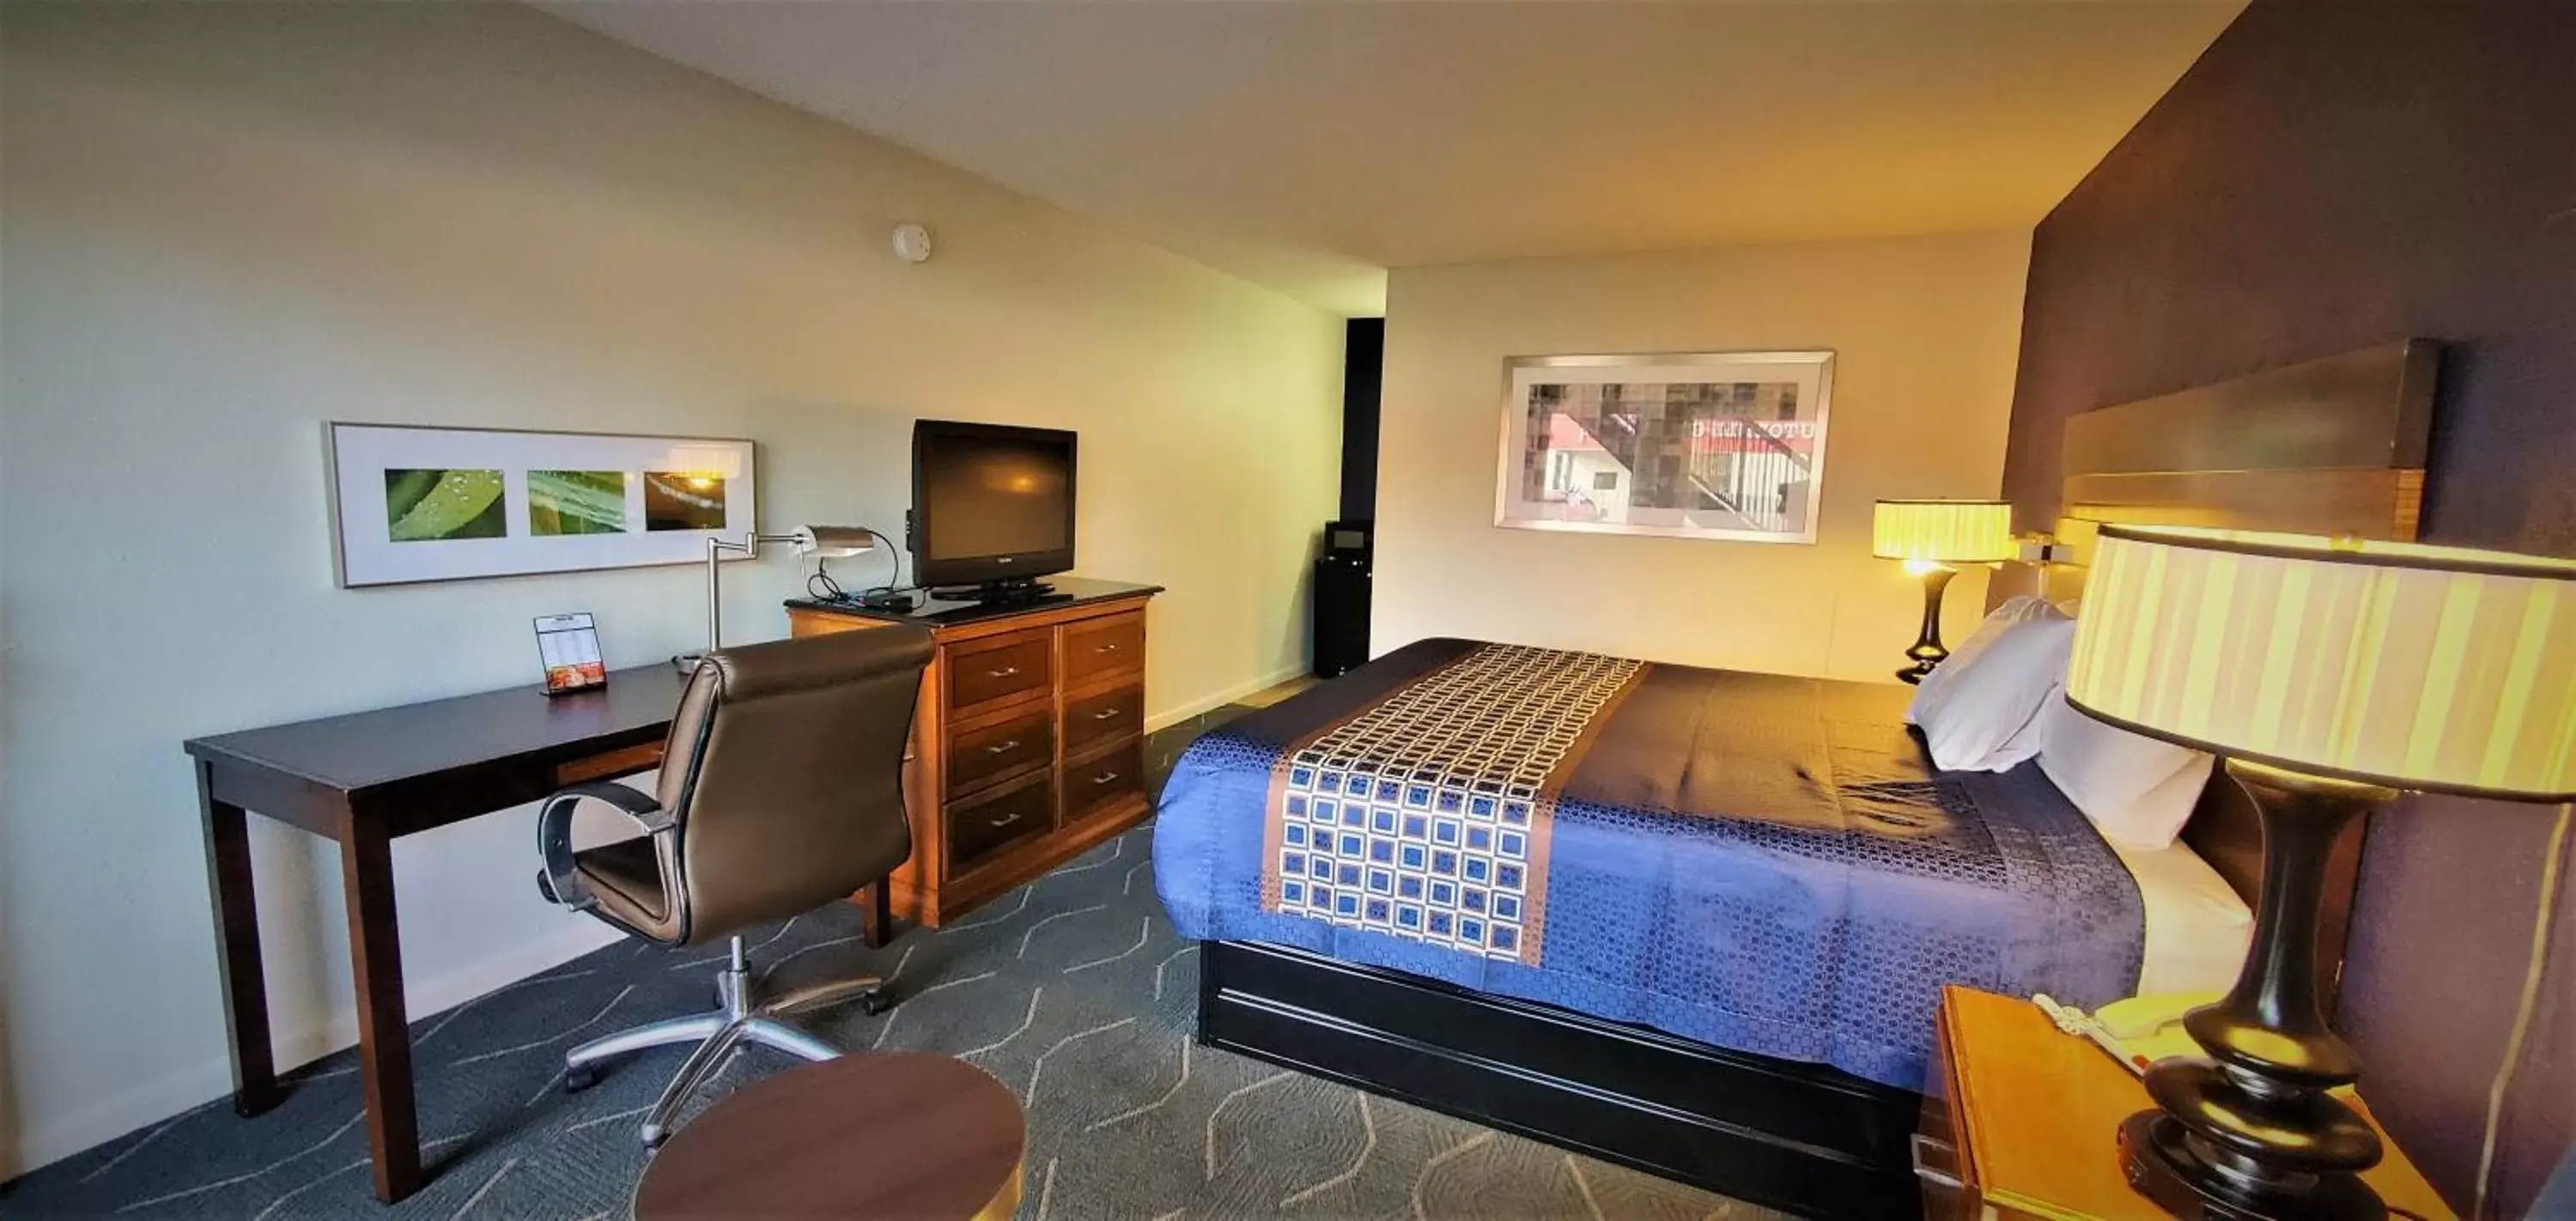 Bedroom in Economy 7 Inn- Newport News